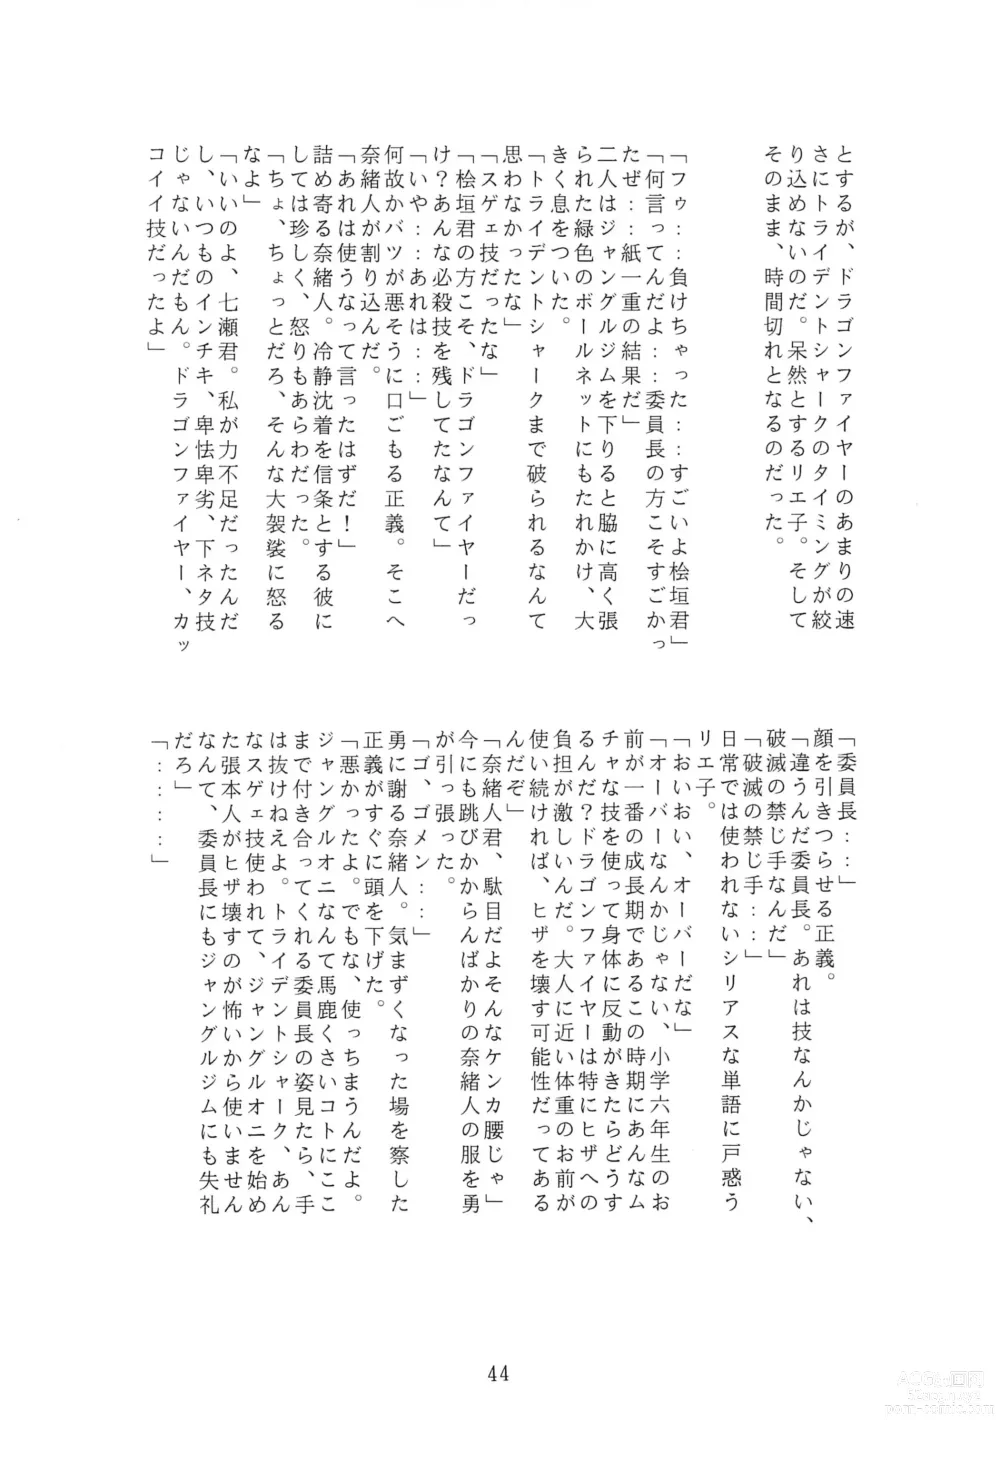 Page 44 of doujinshi JANGLE ONI Mermaid